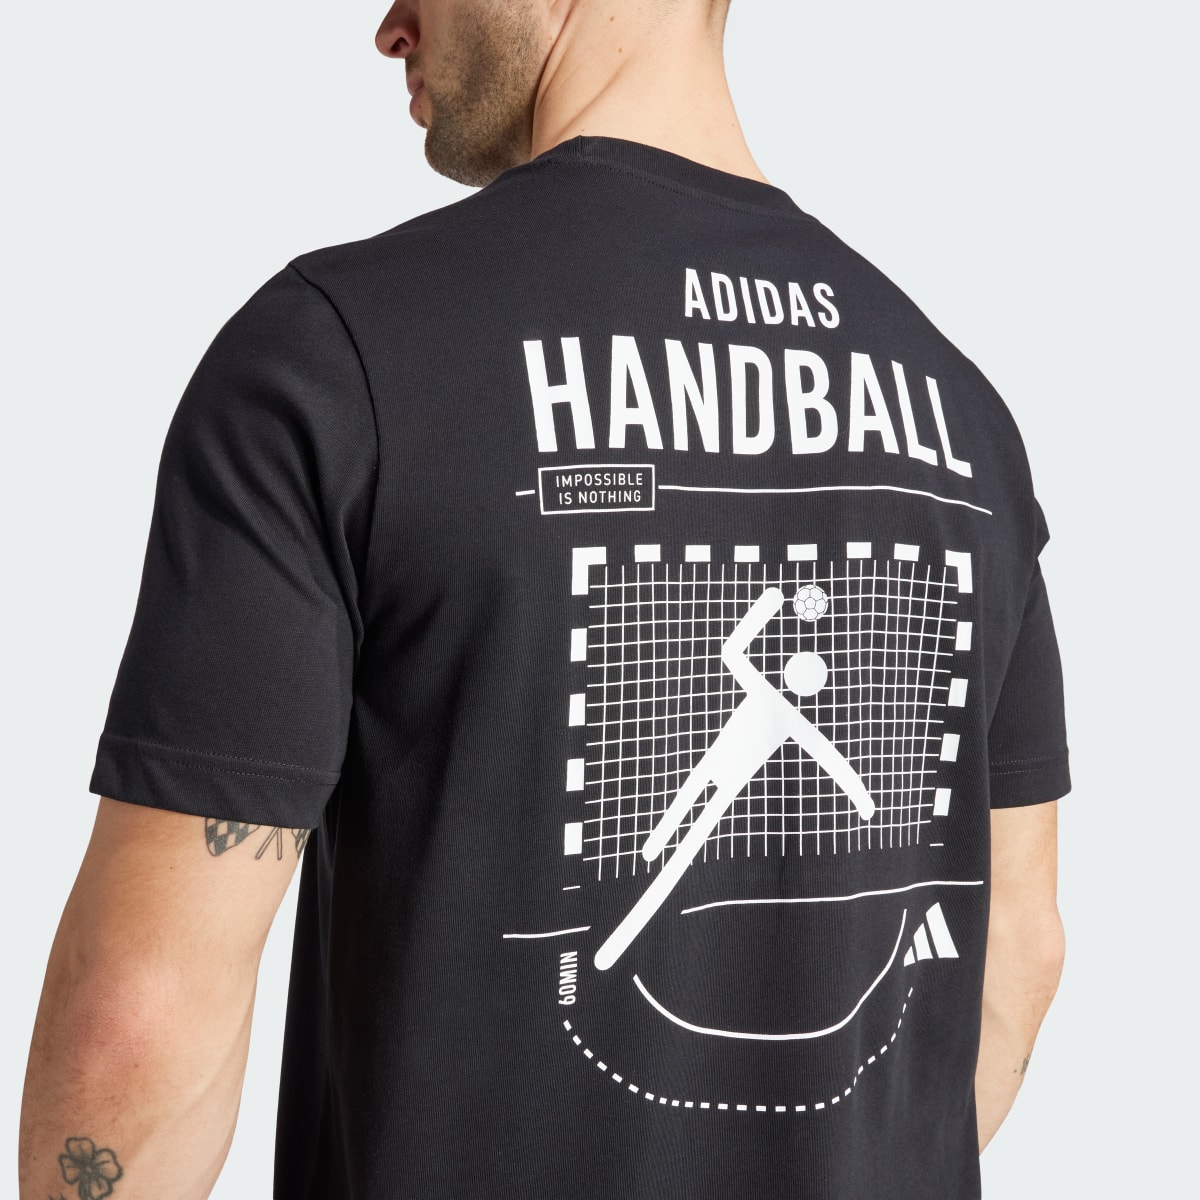 Adidas Handball Category Graphic T-Shirt. 7